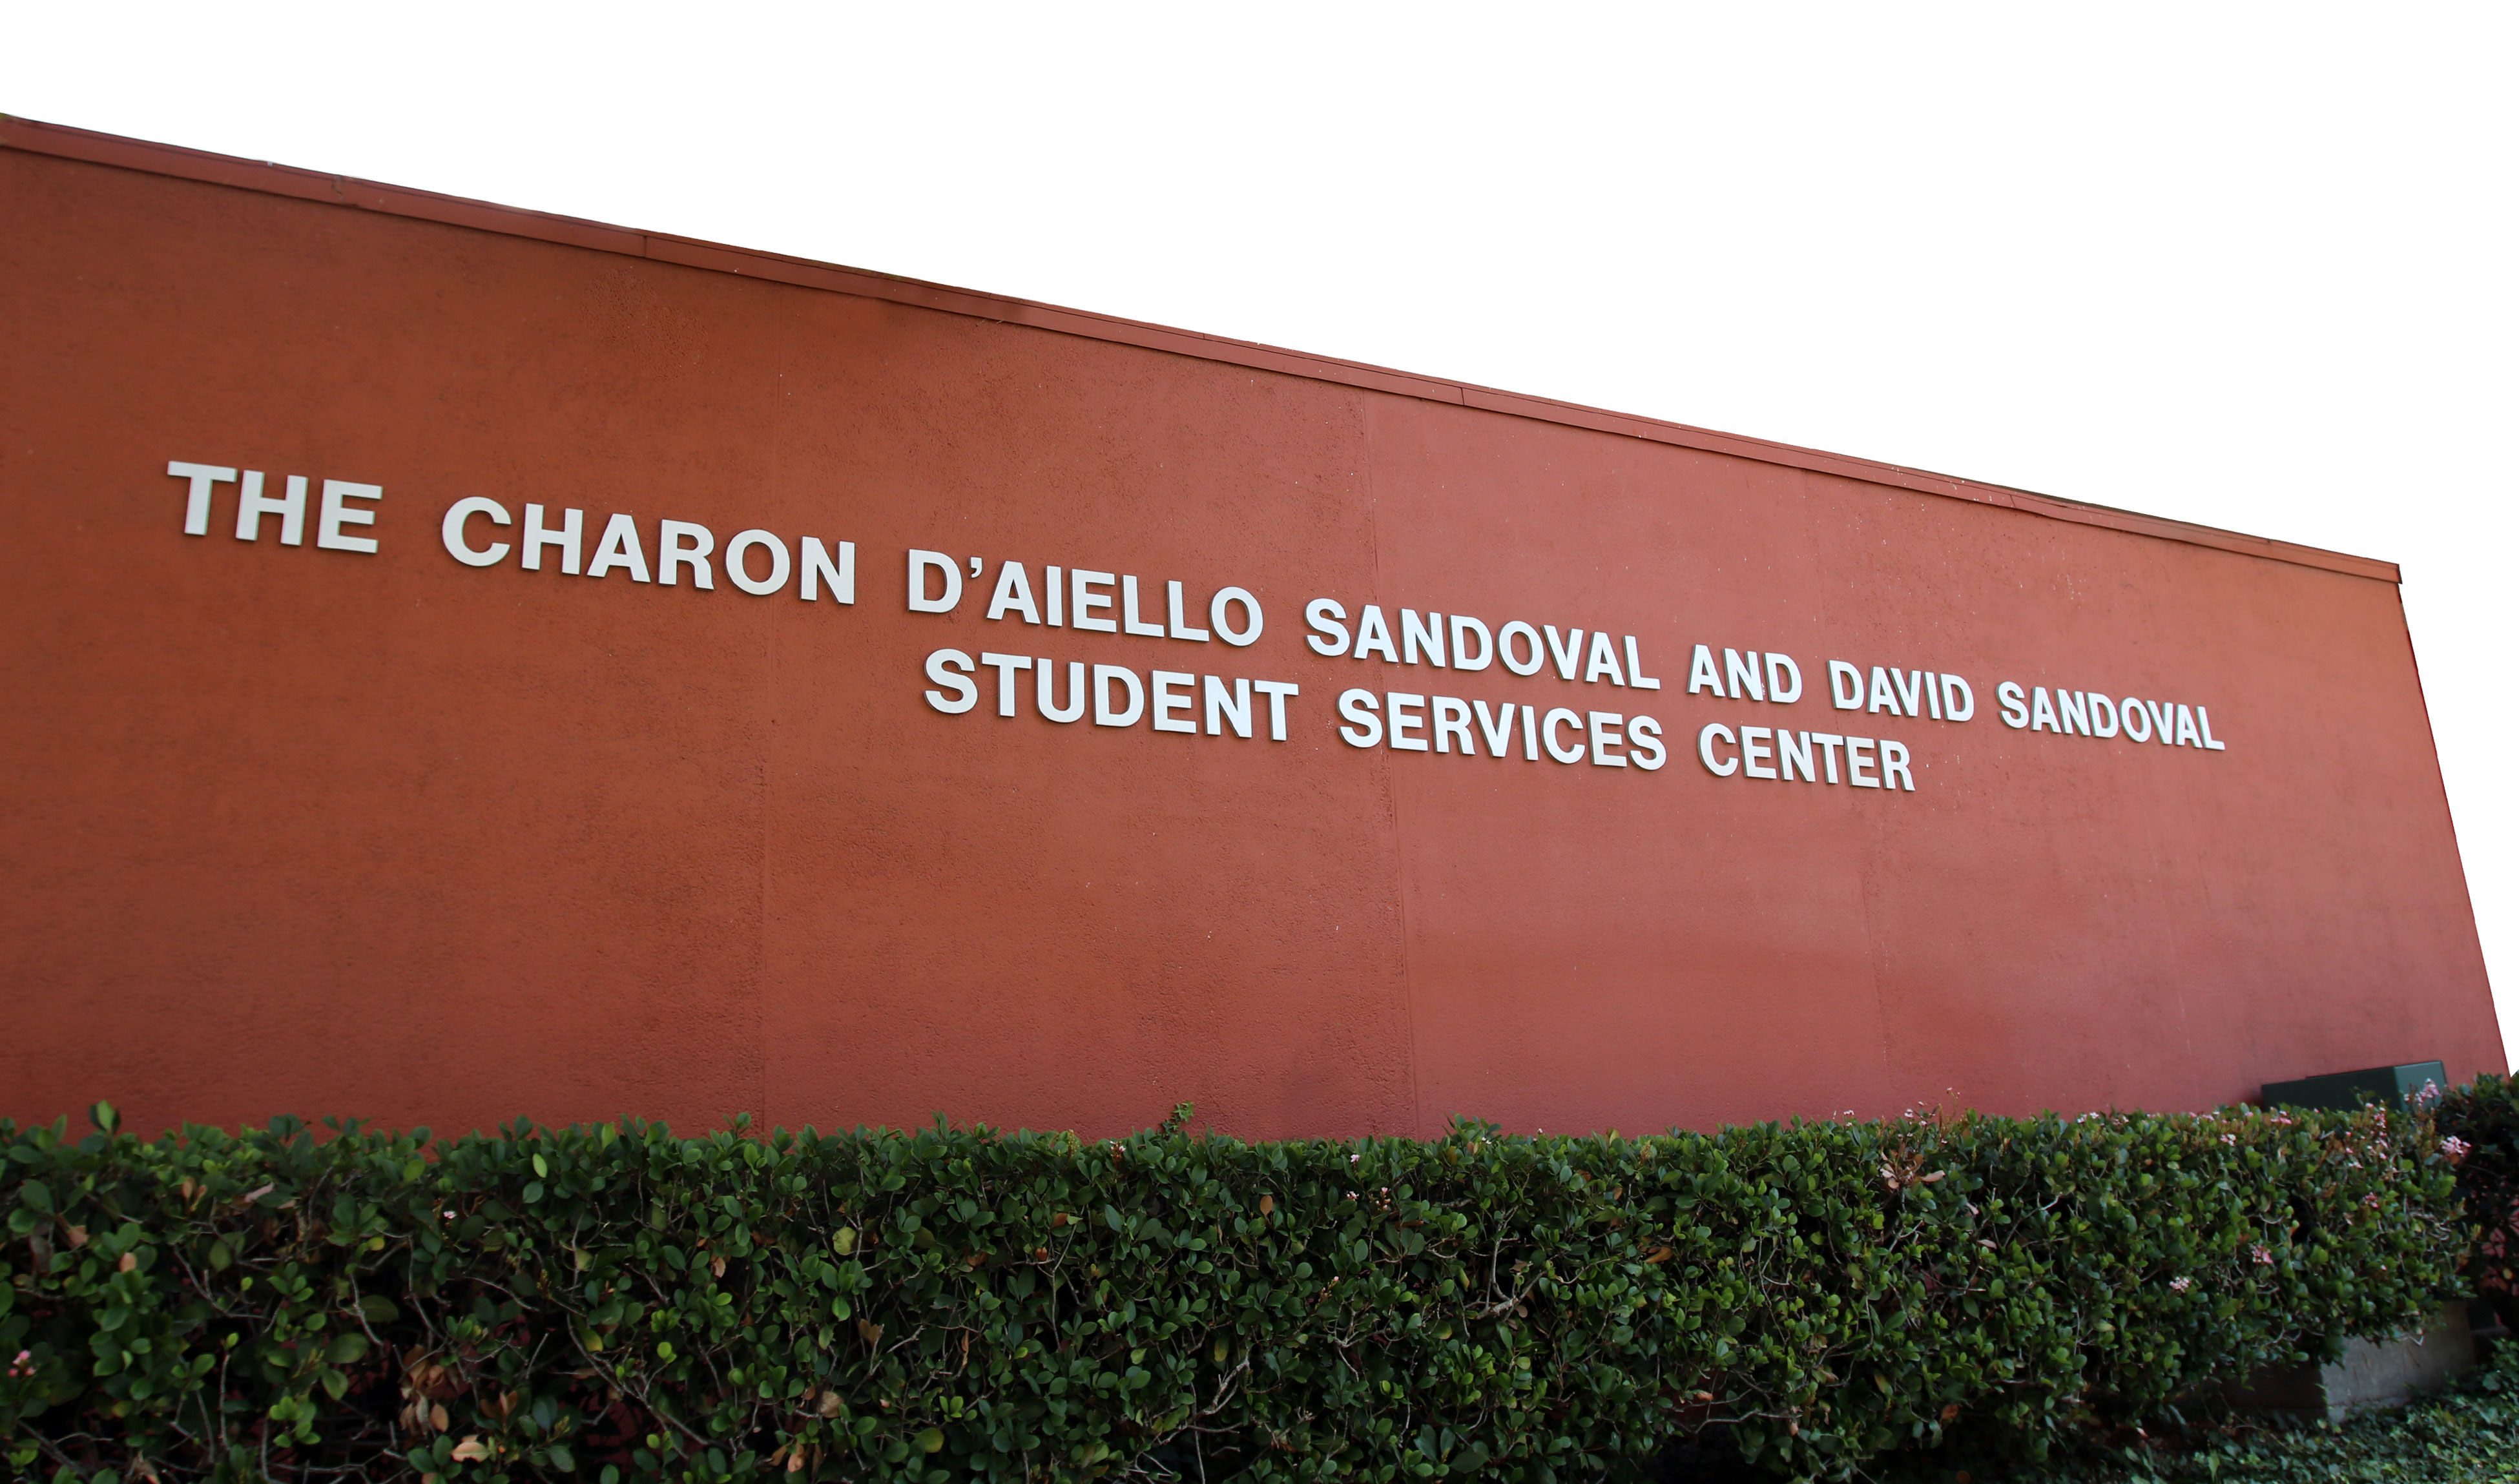 Sandoval Student Services Center